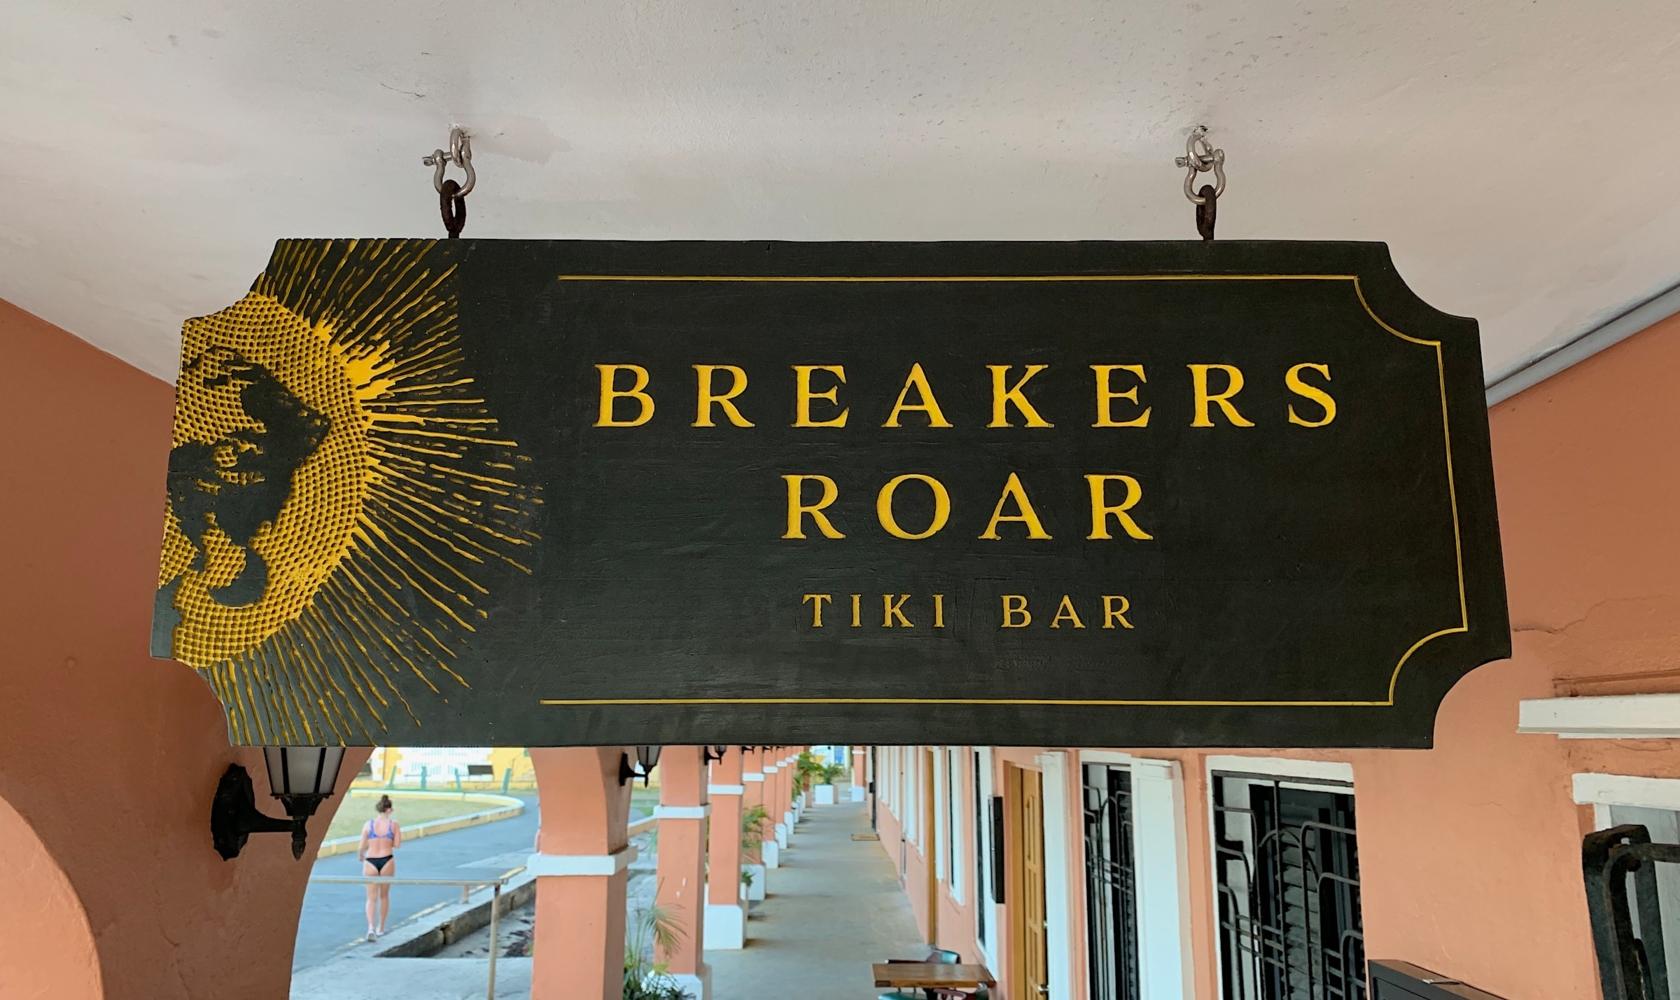 Breakers Roar Tiki Bar - entry sign